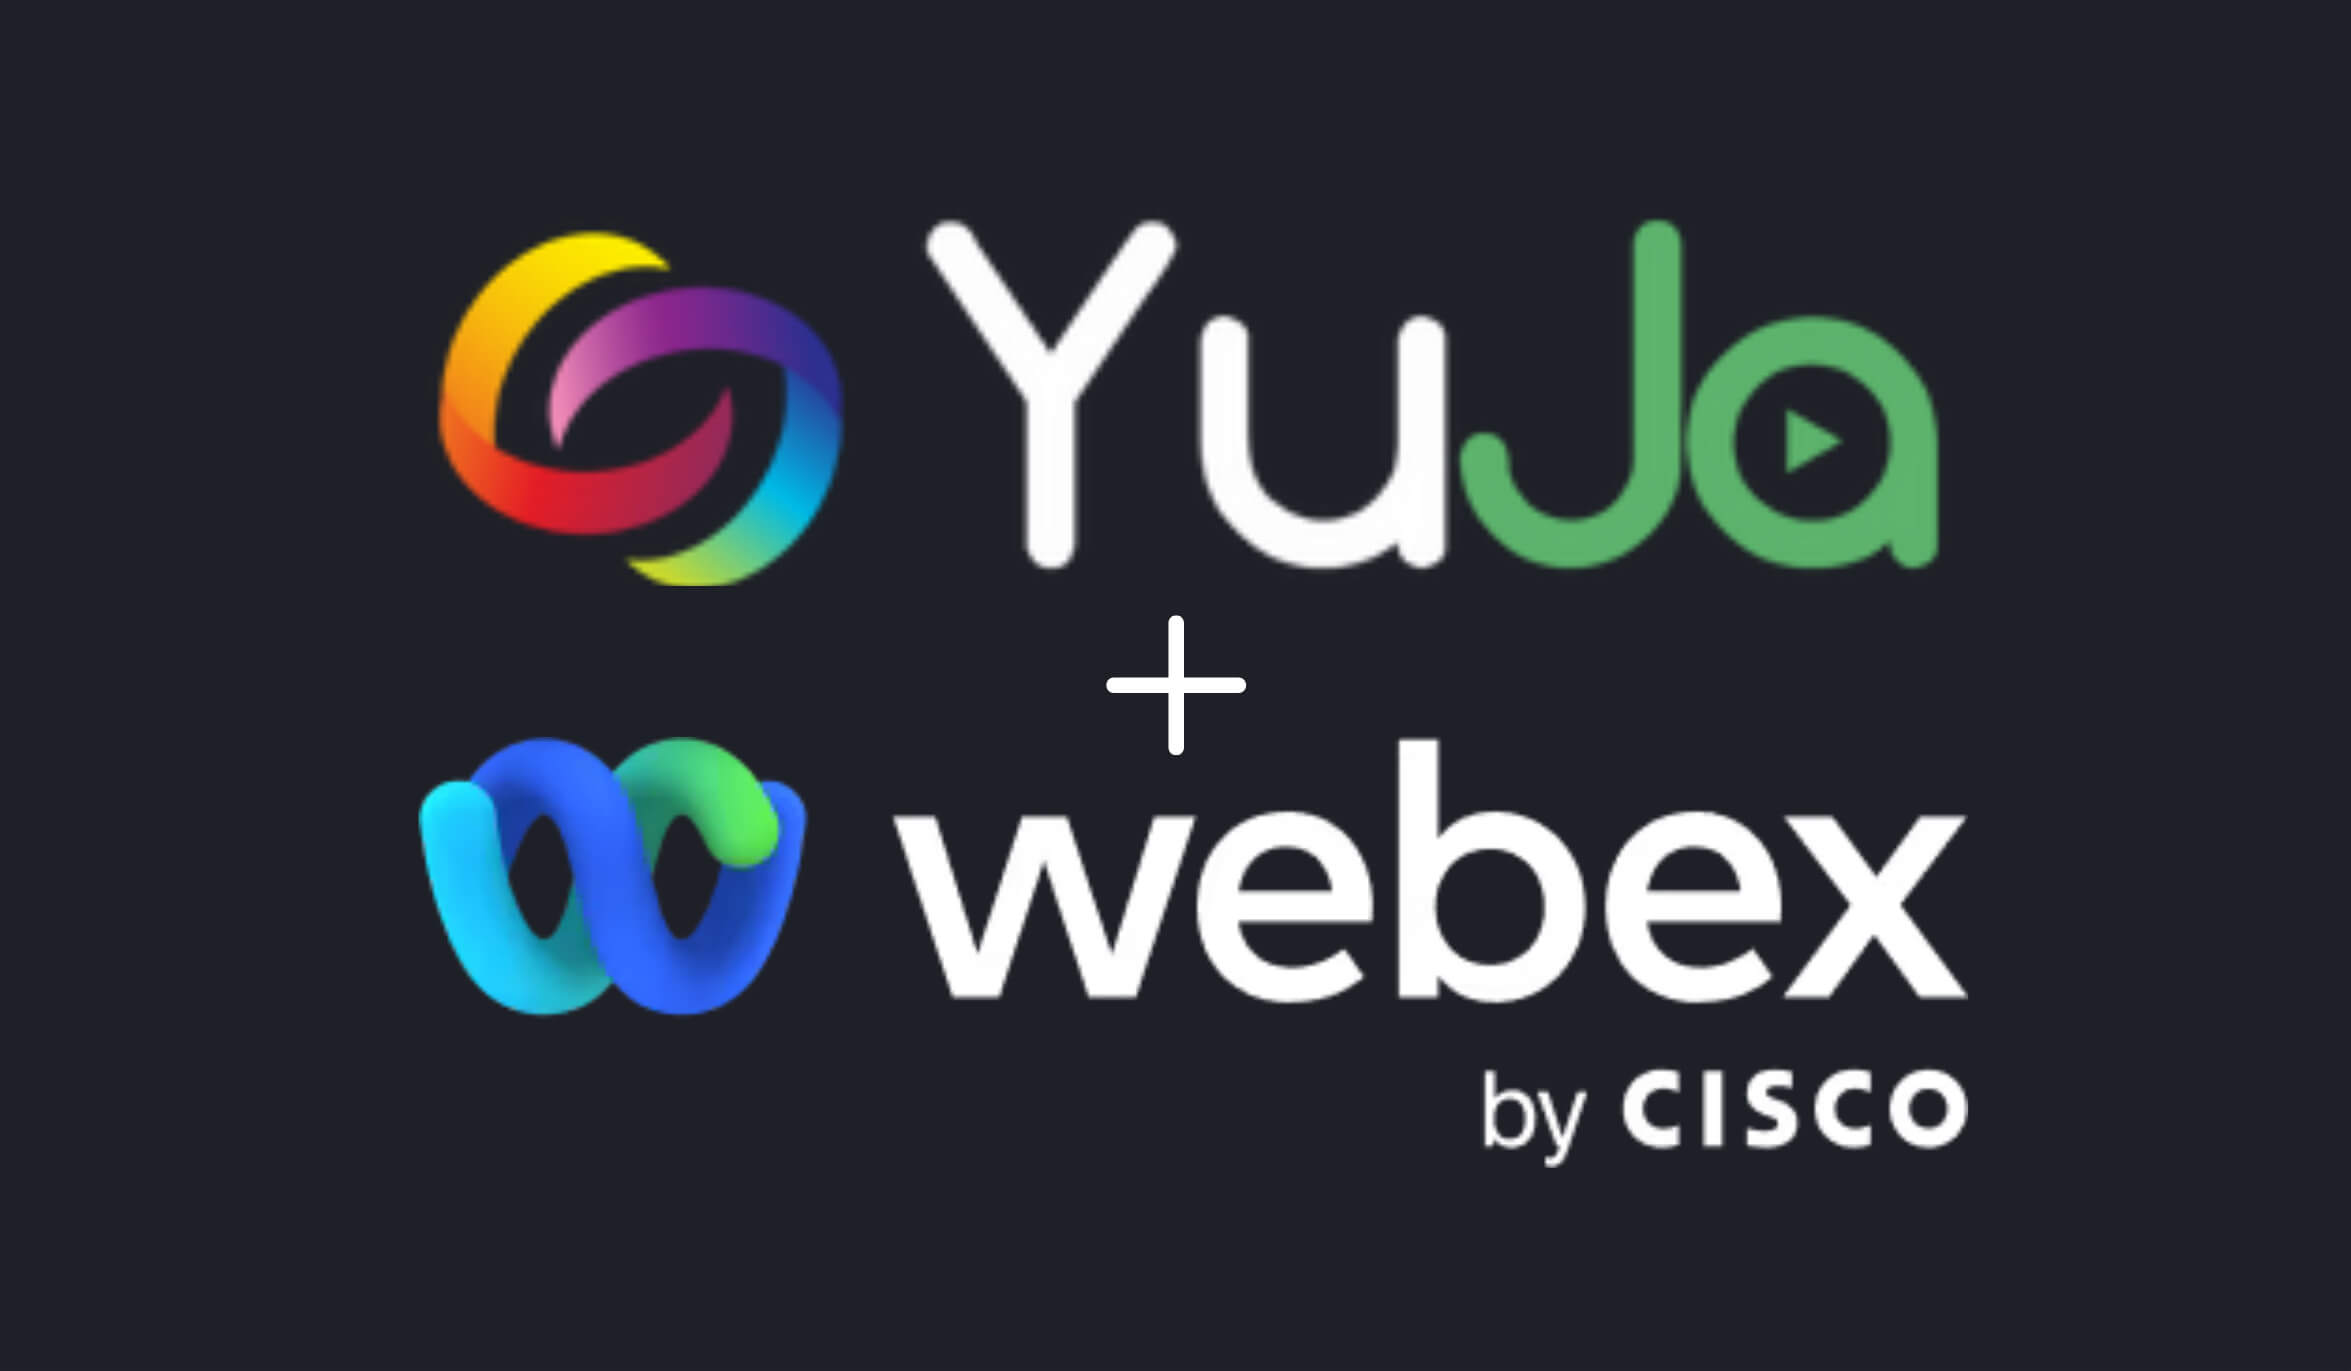 YuJa + Webex logos